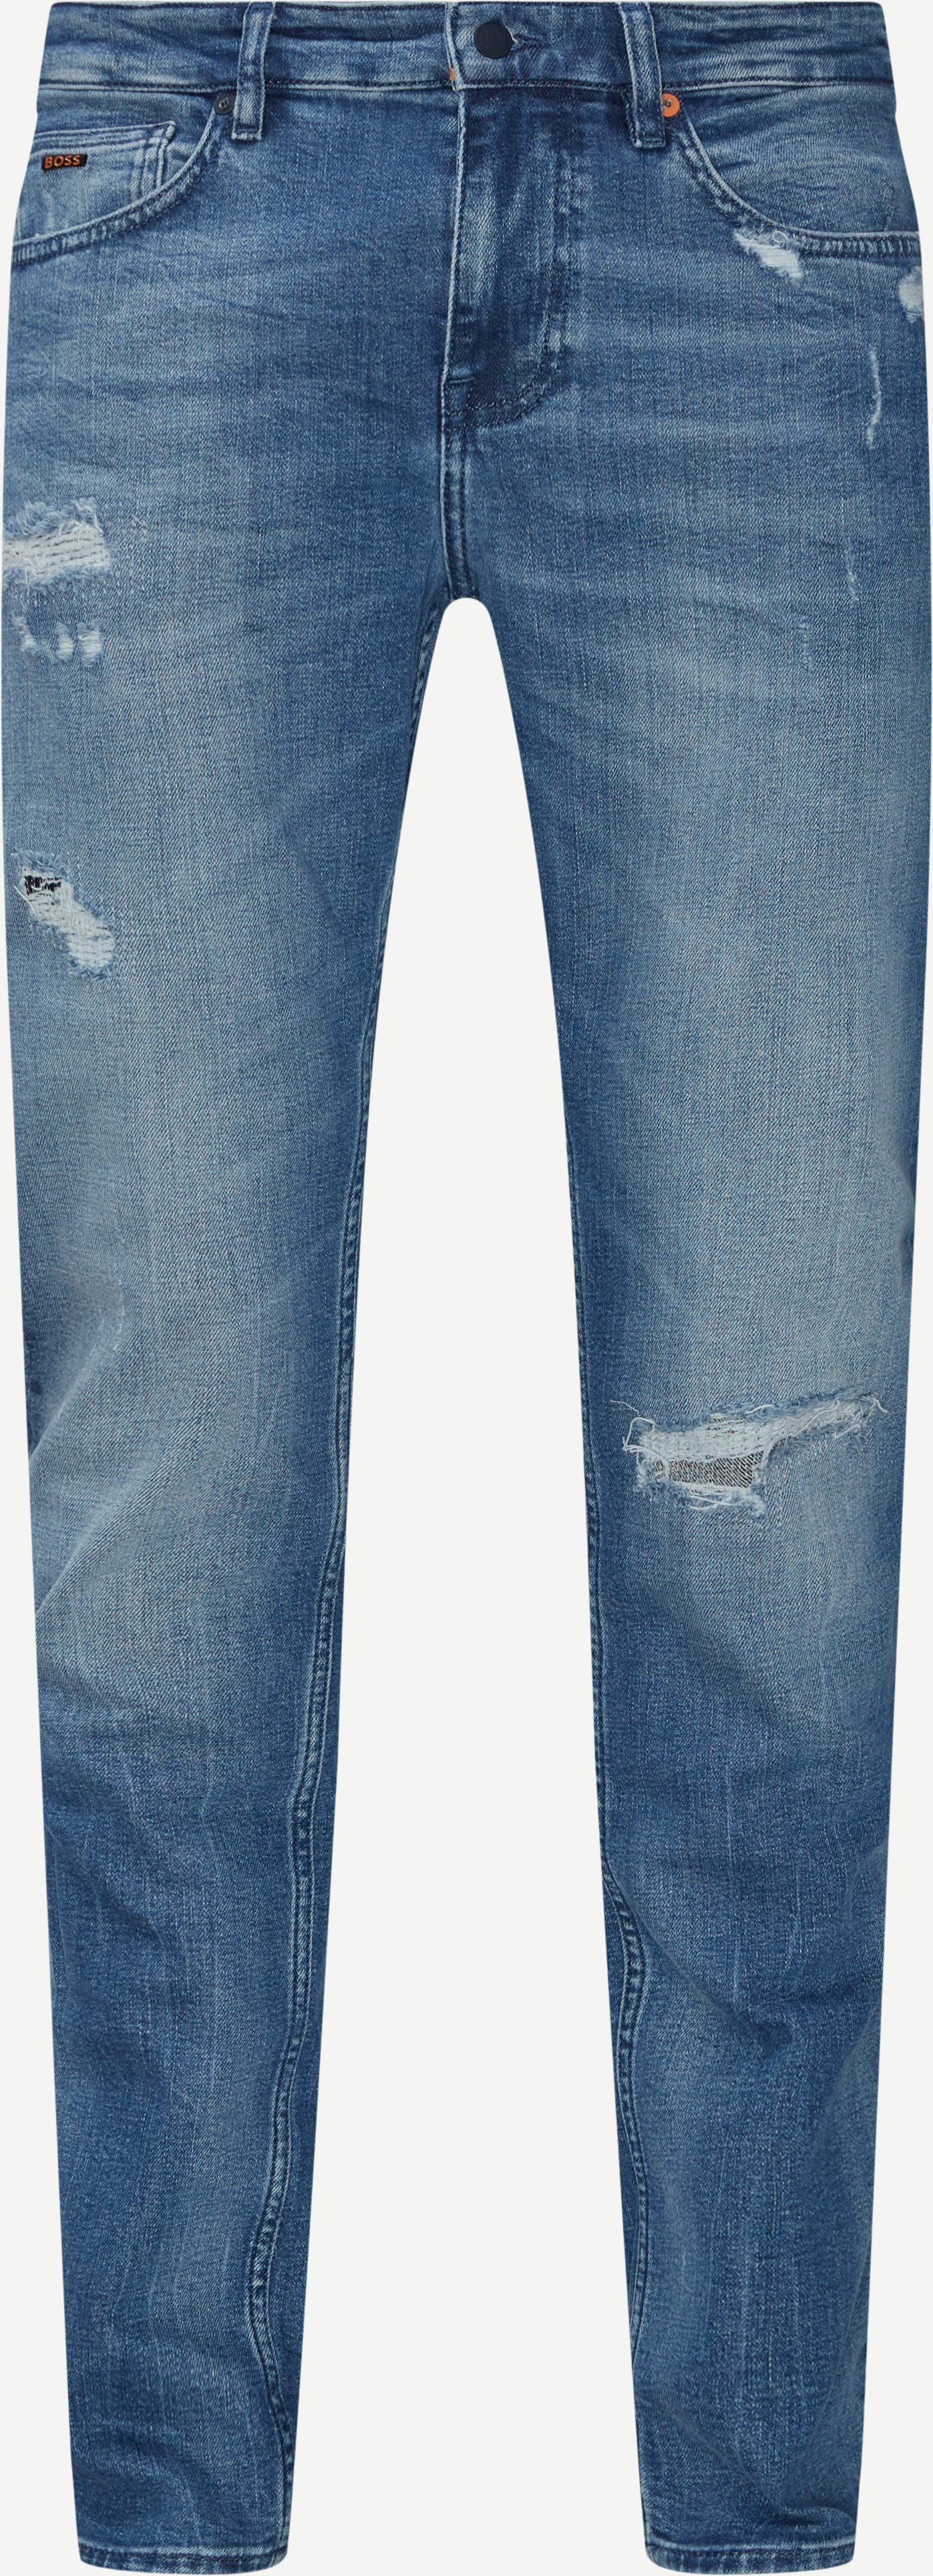 Delaware BC Jeans - Jeans - Slim fit - Denim